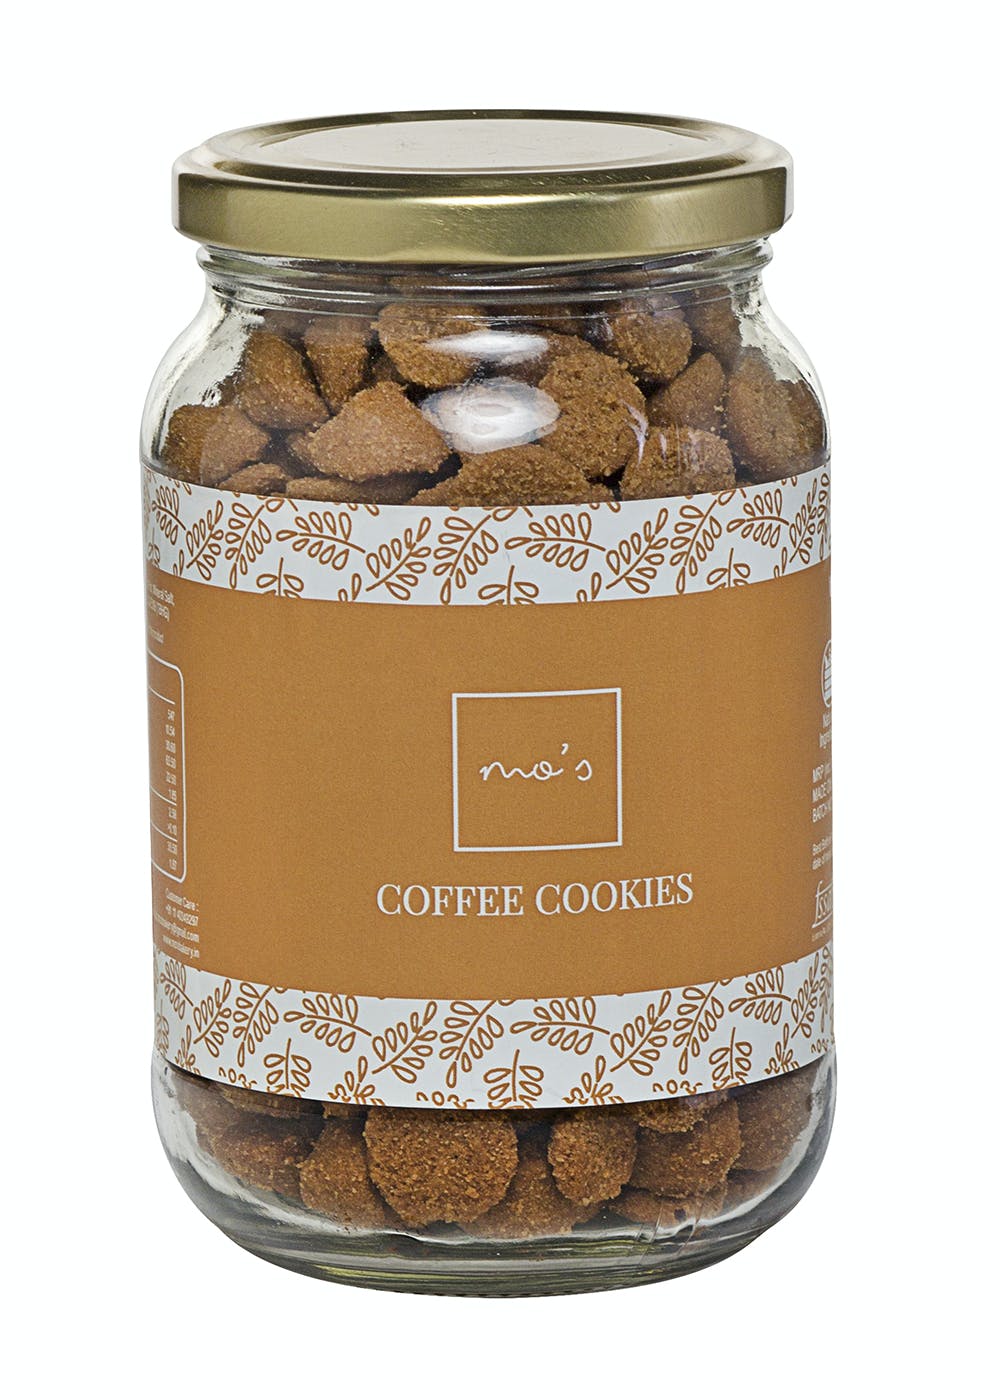 Coffee Cookies - 200g